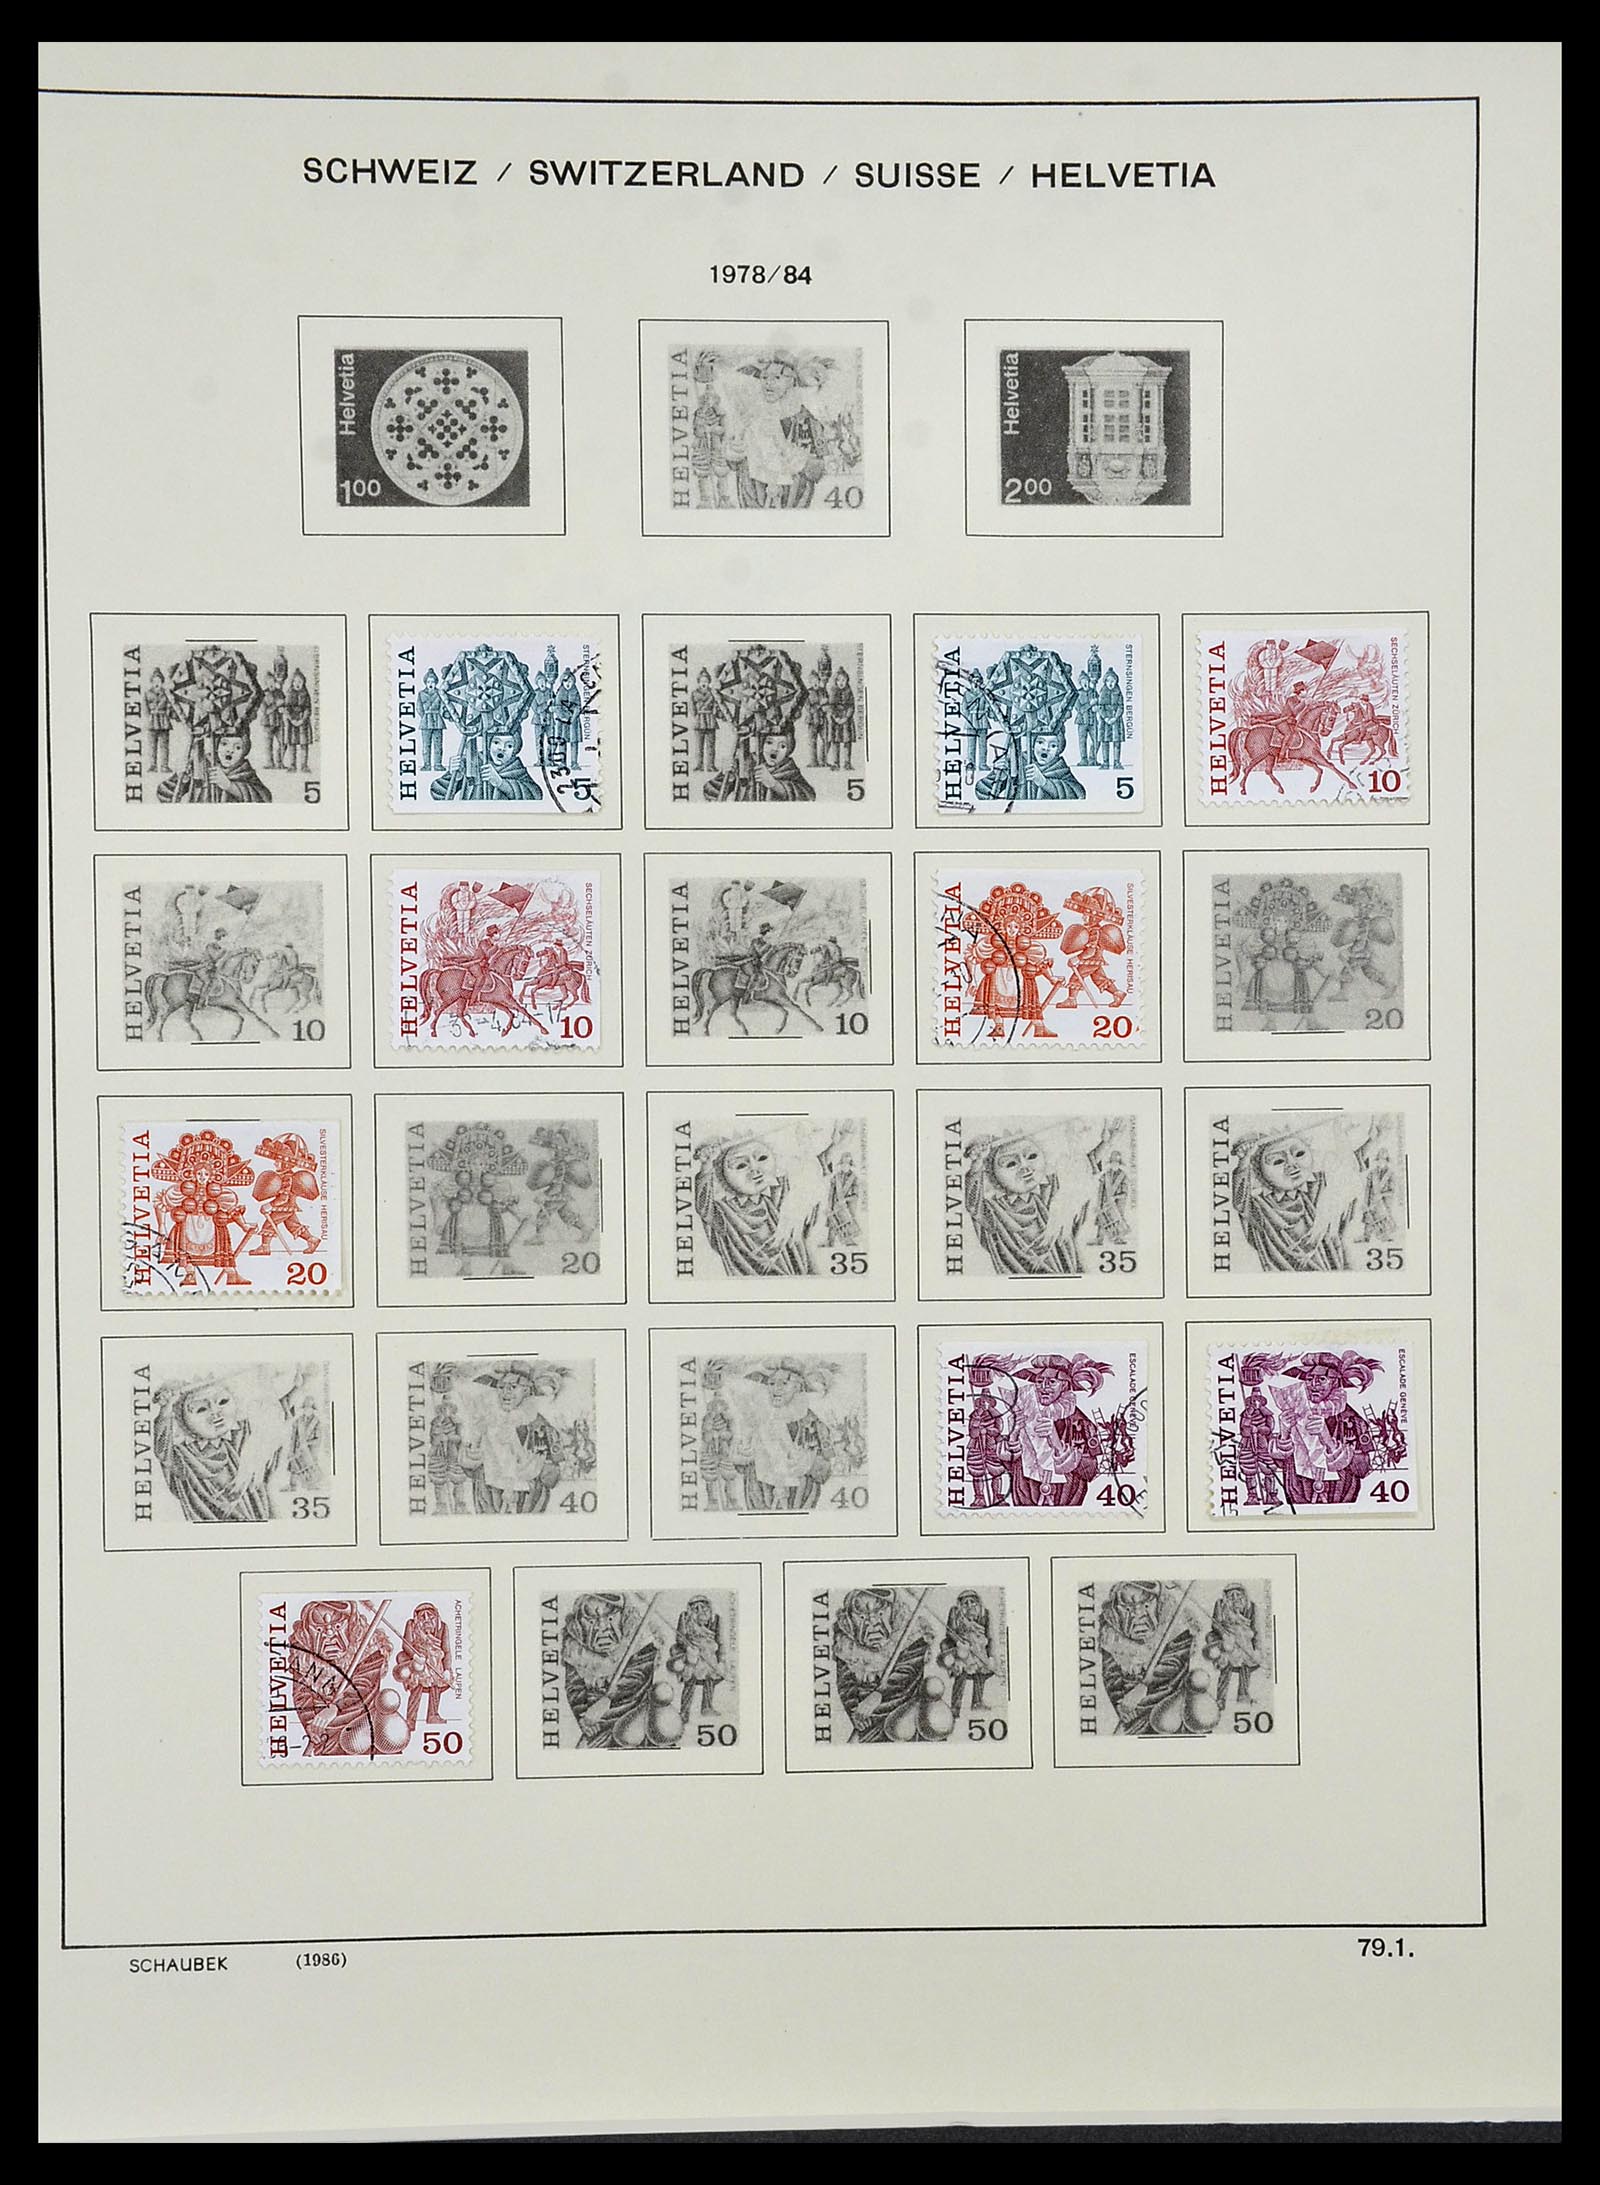 34436 077 - Stamp Collection 34436 Switzerland 1854-2016.